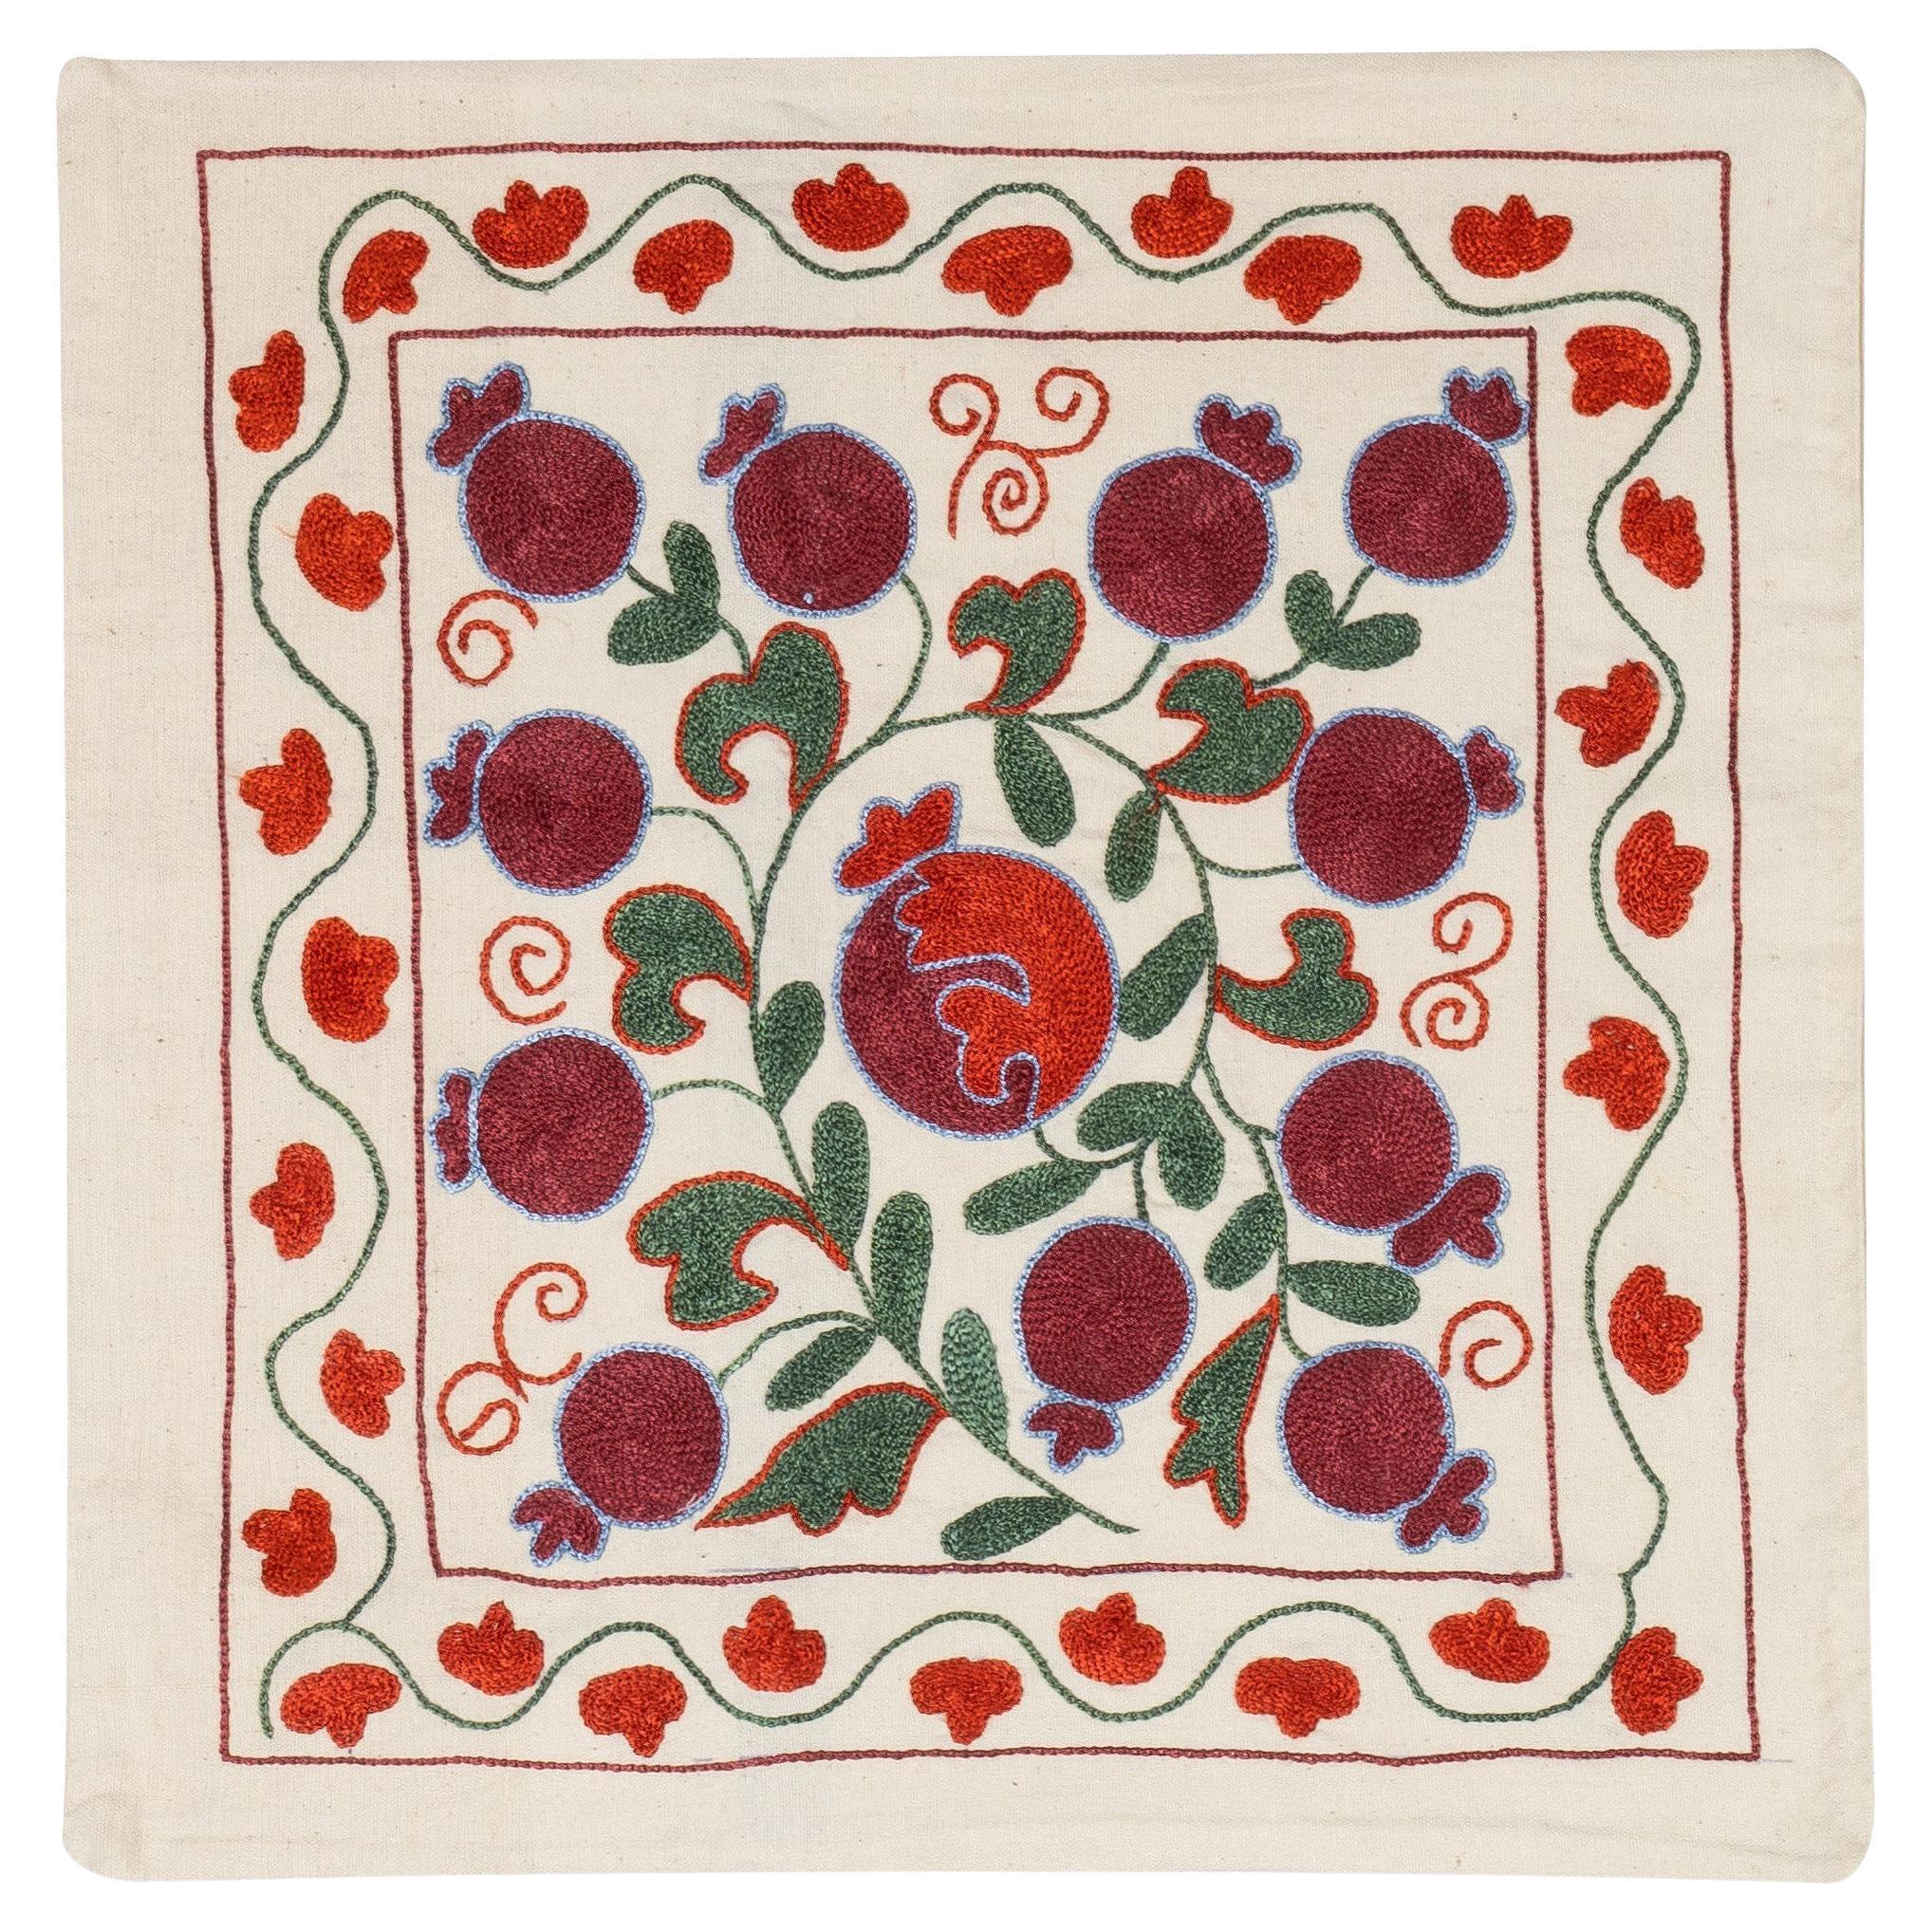 19"x19" Hand Embroidery Suzani Cushion Cover. Decorative Uzbek Throw Pillow